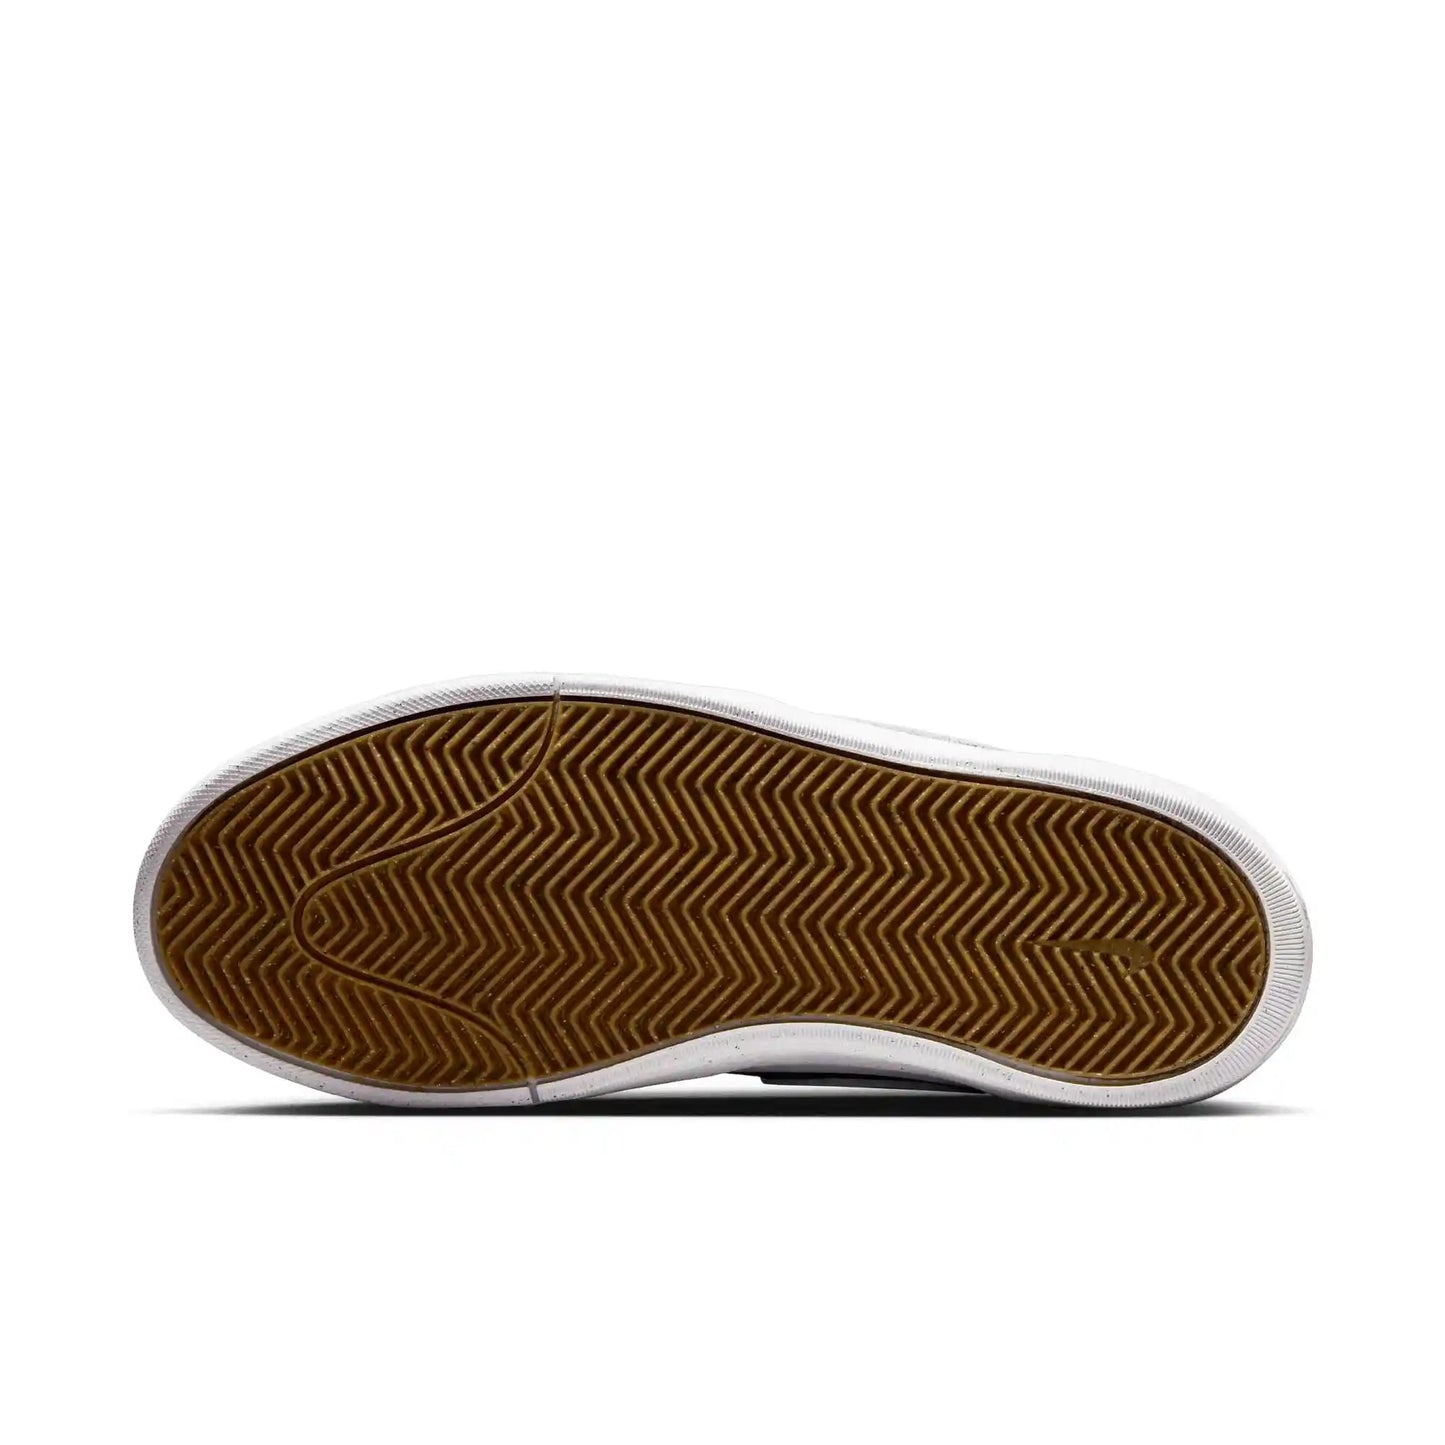 Nike SB React Leo, black/white-black-gum light brown - Tiki Room Skateboards - 11